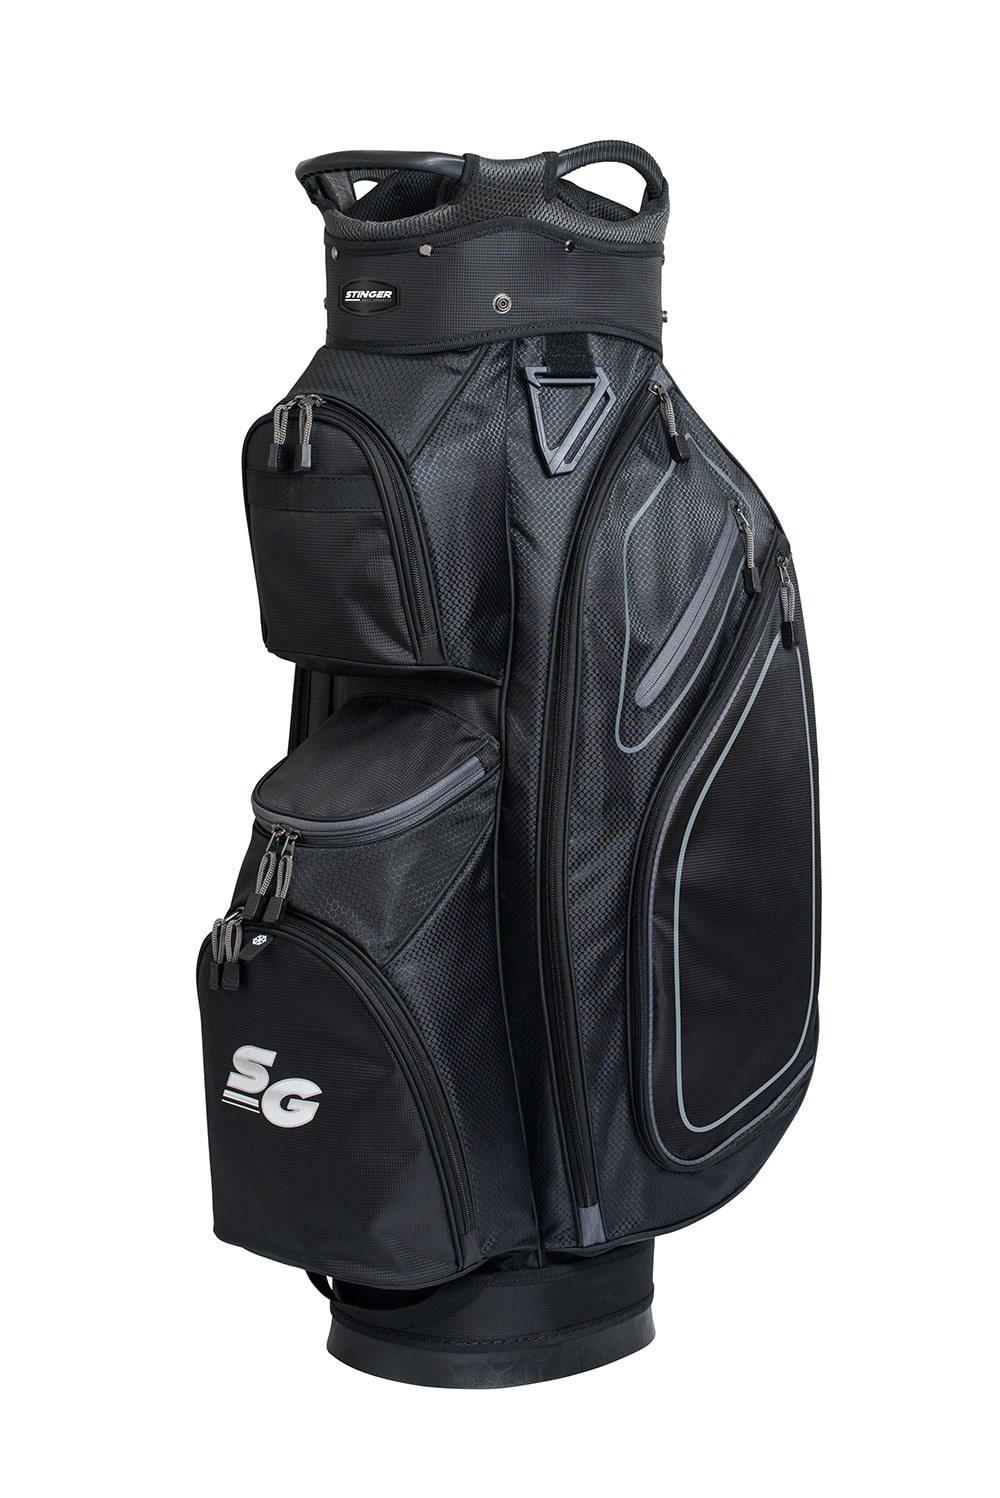 Stinger - Lightweight Golf Bag Black/Grey AJM - Autodrive